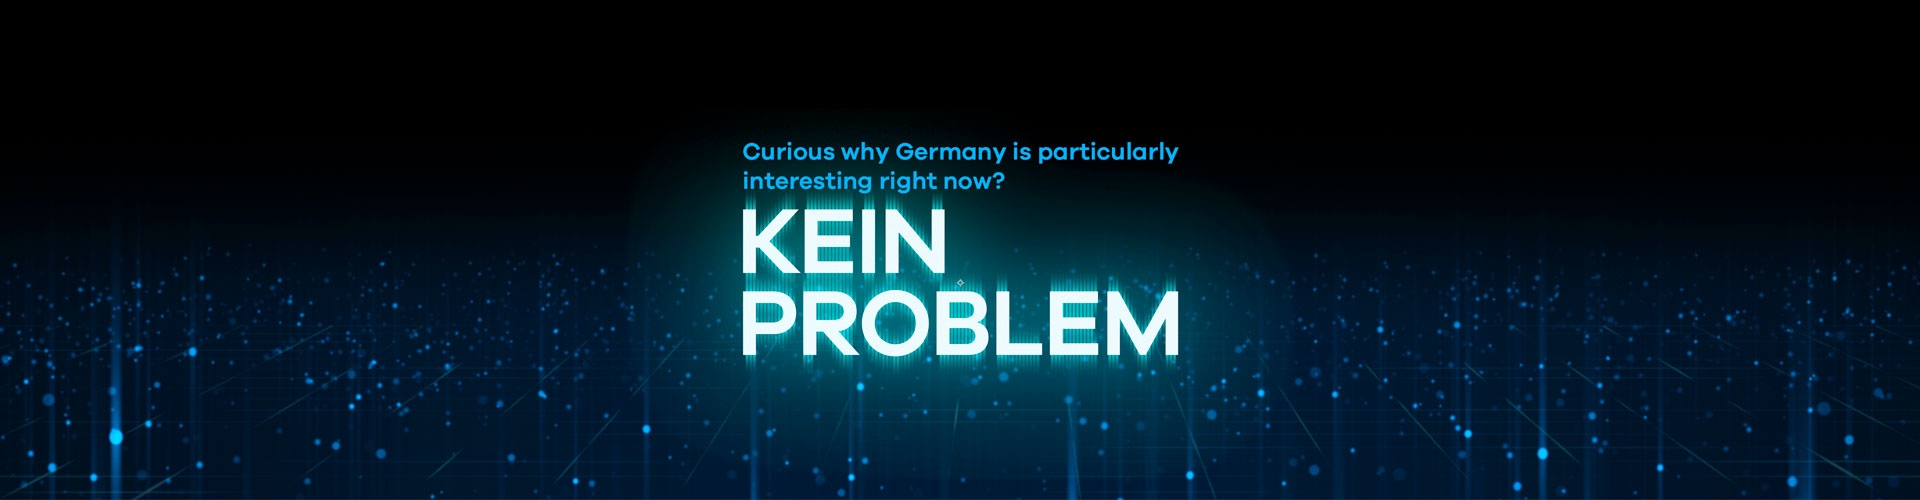 Kein_problem_en_1920x500_v2.jpg